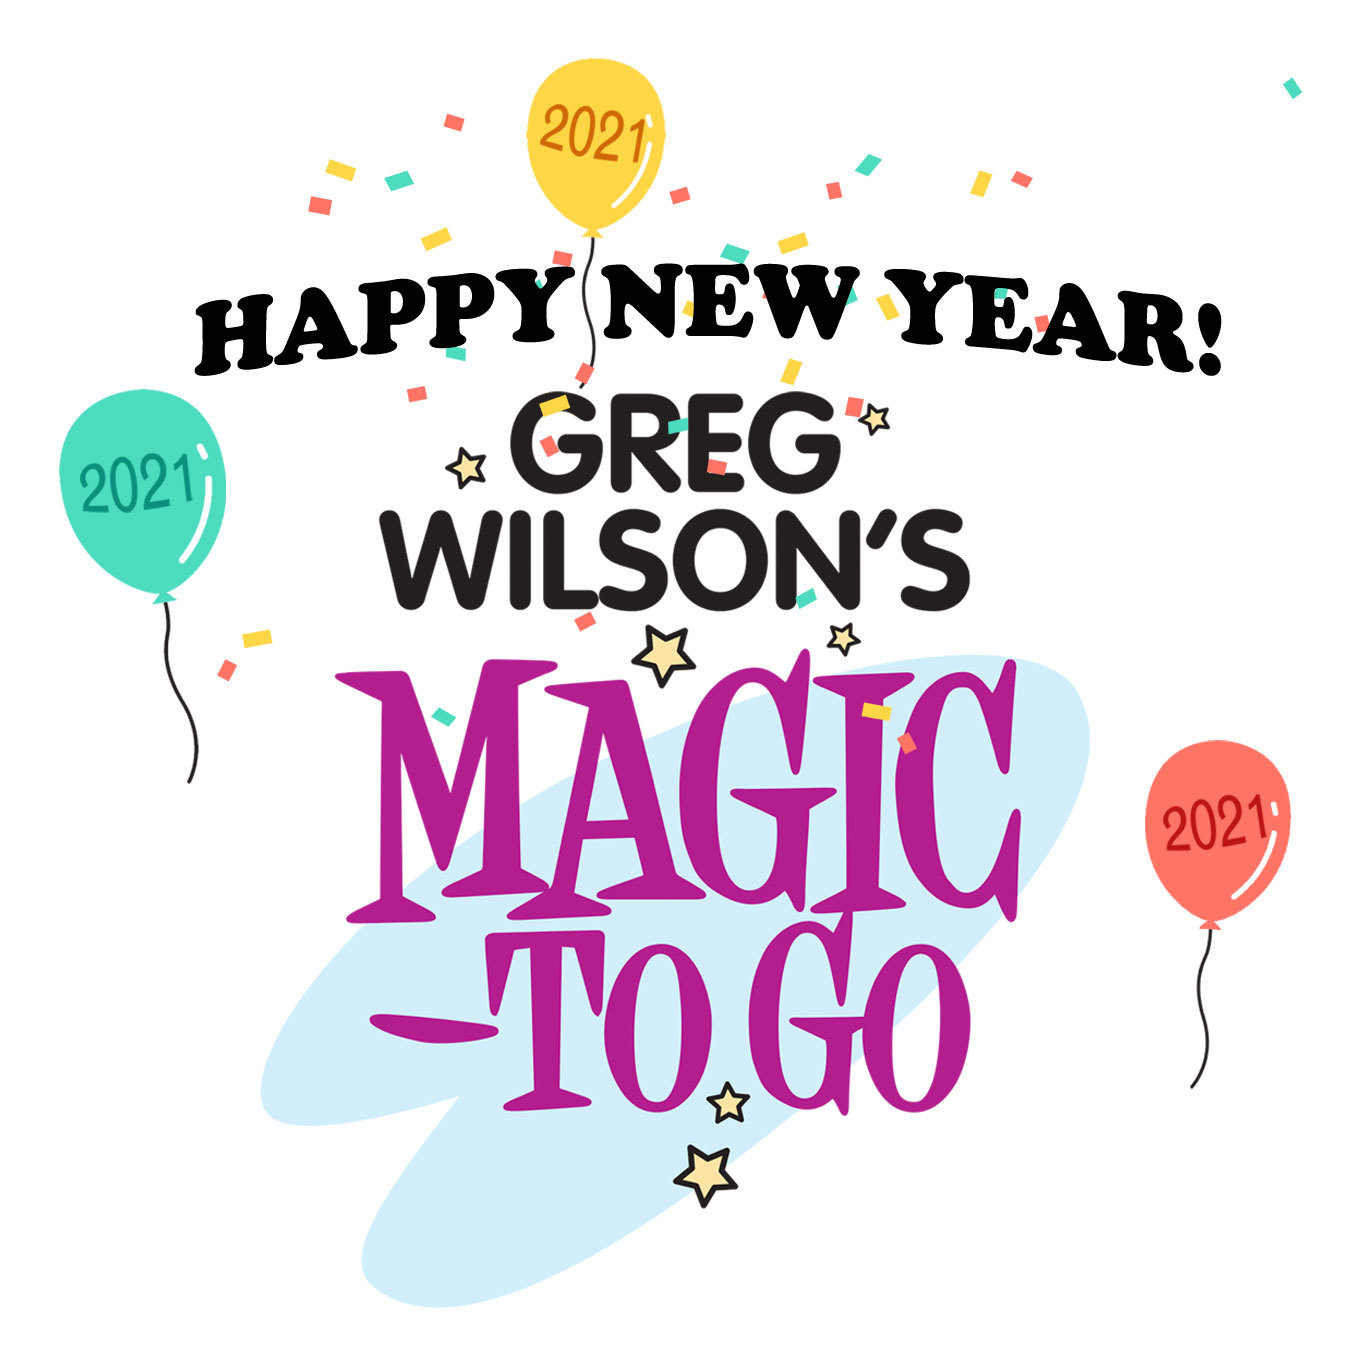 Greg Wilson's MagicToGo Happy New Year Logo